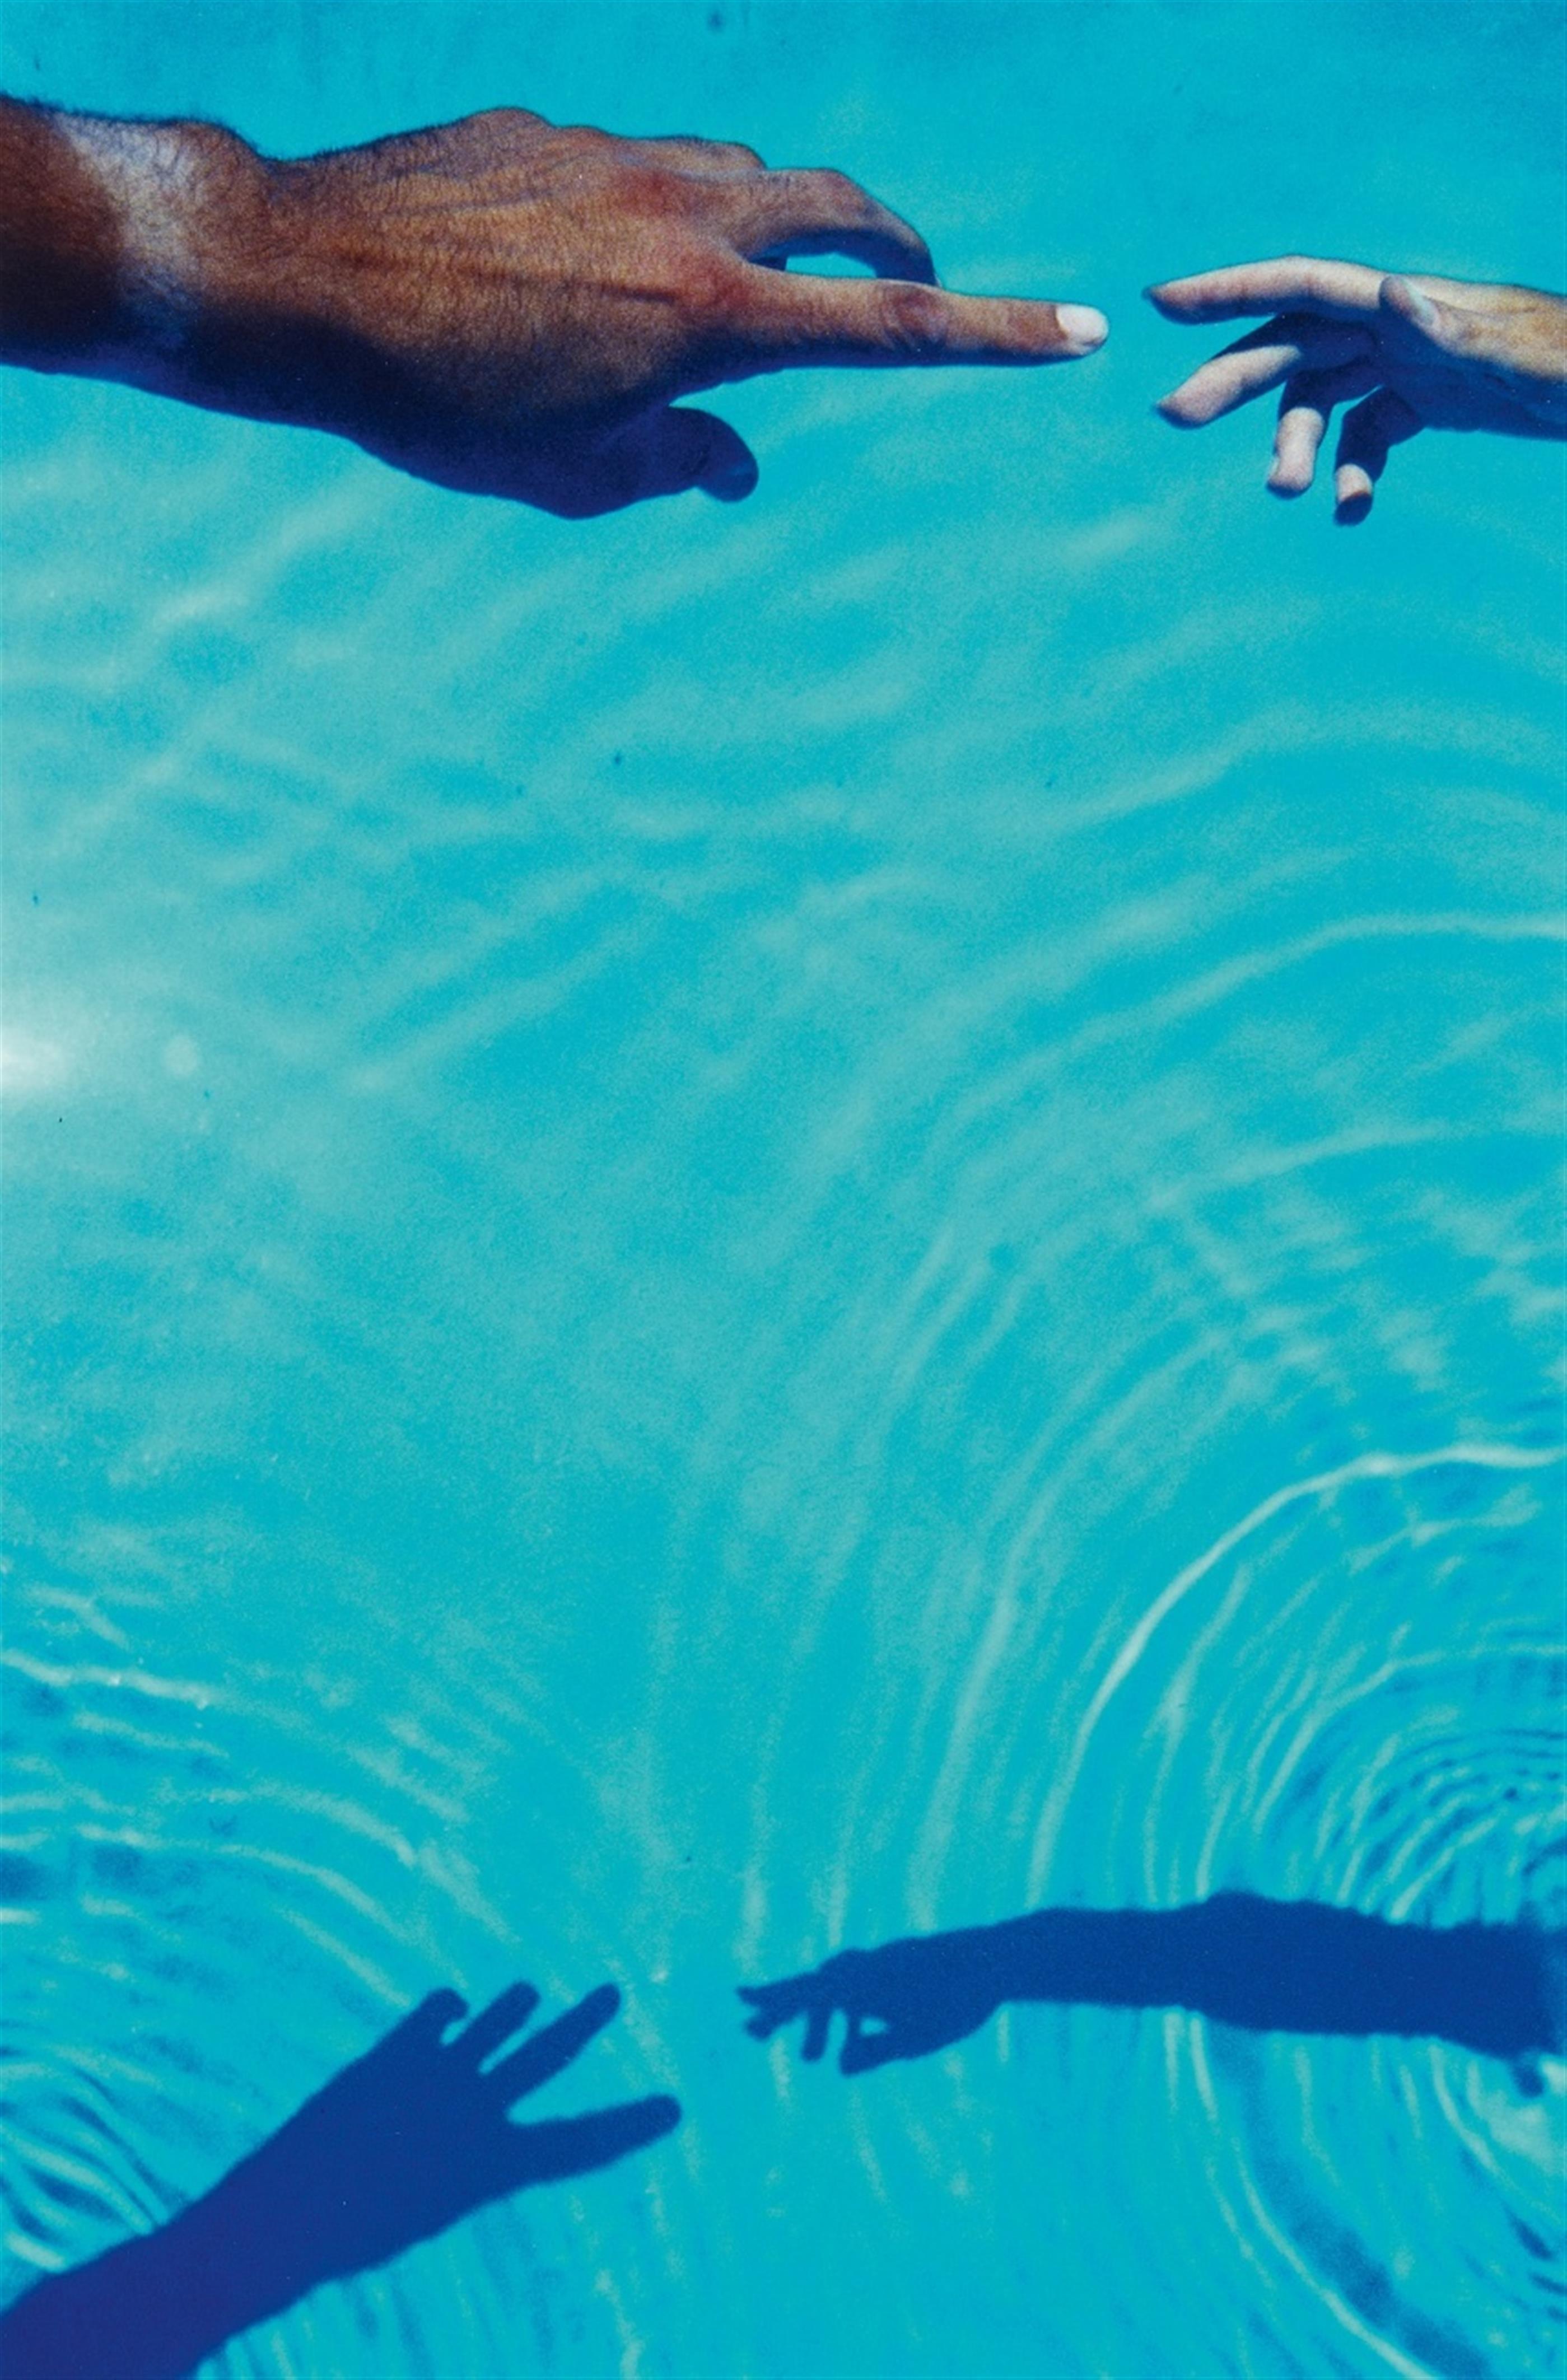 Franco Fontana - Swimming pool ("Ommaggio a Michelangelo") - image-1